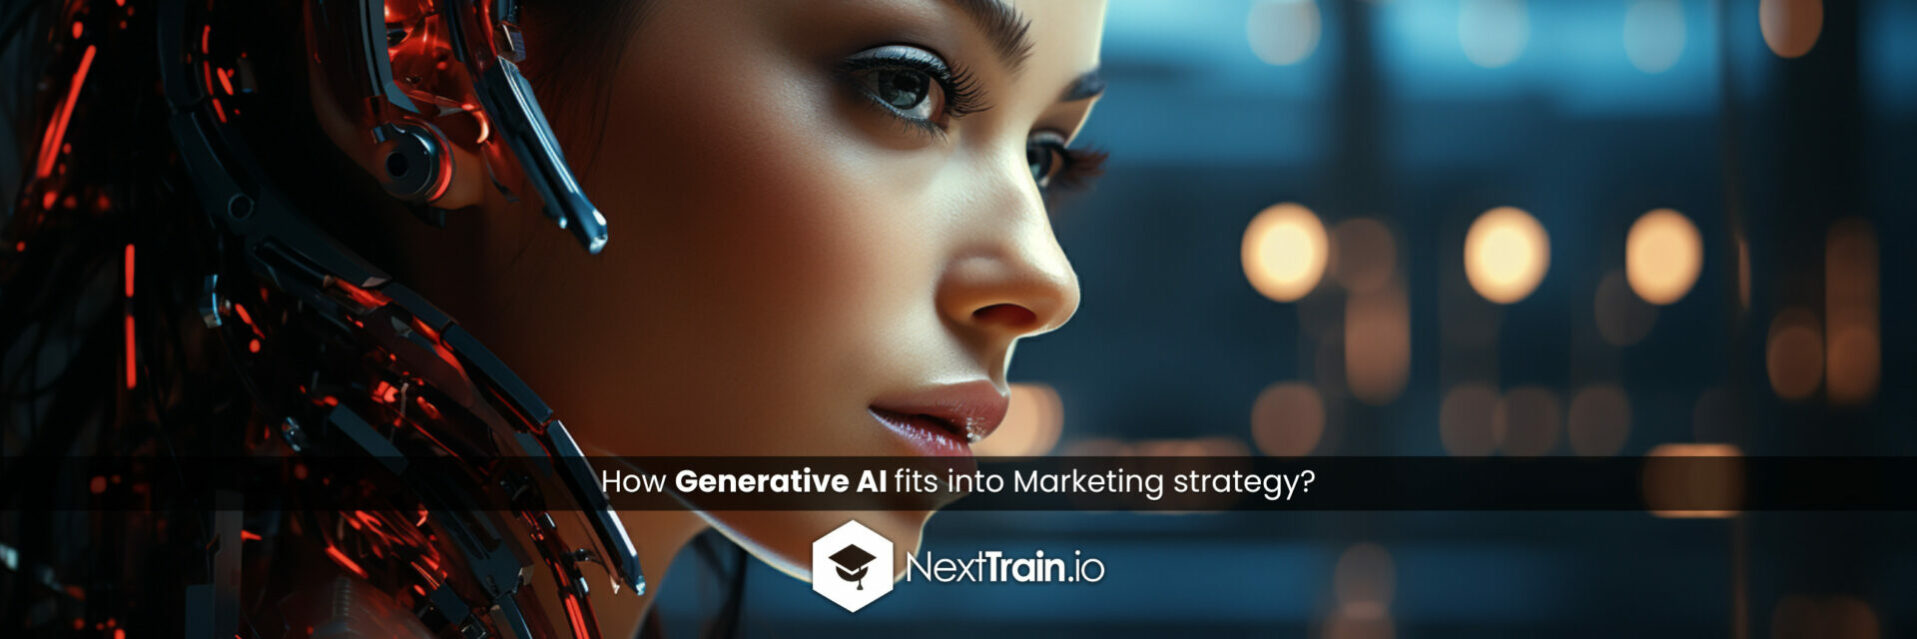 How Generative AI fits into Marketing strategy?